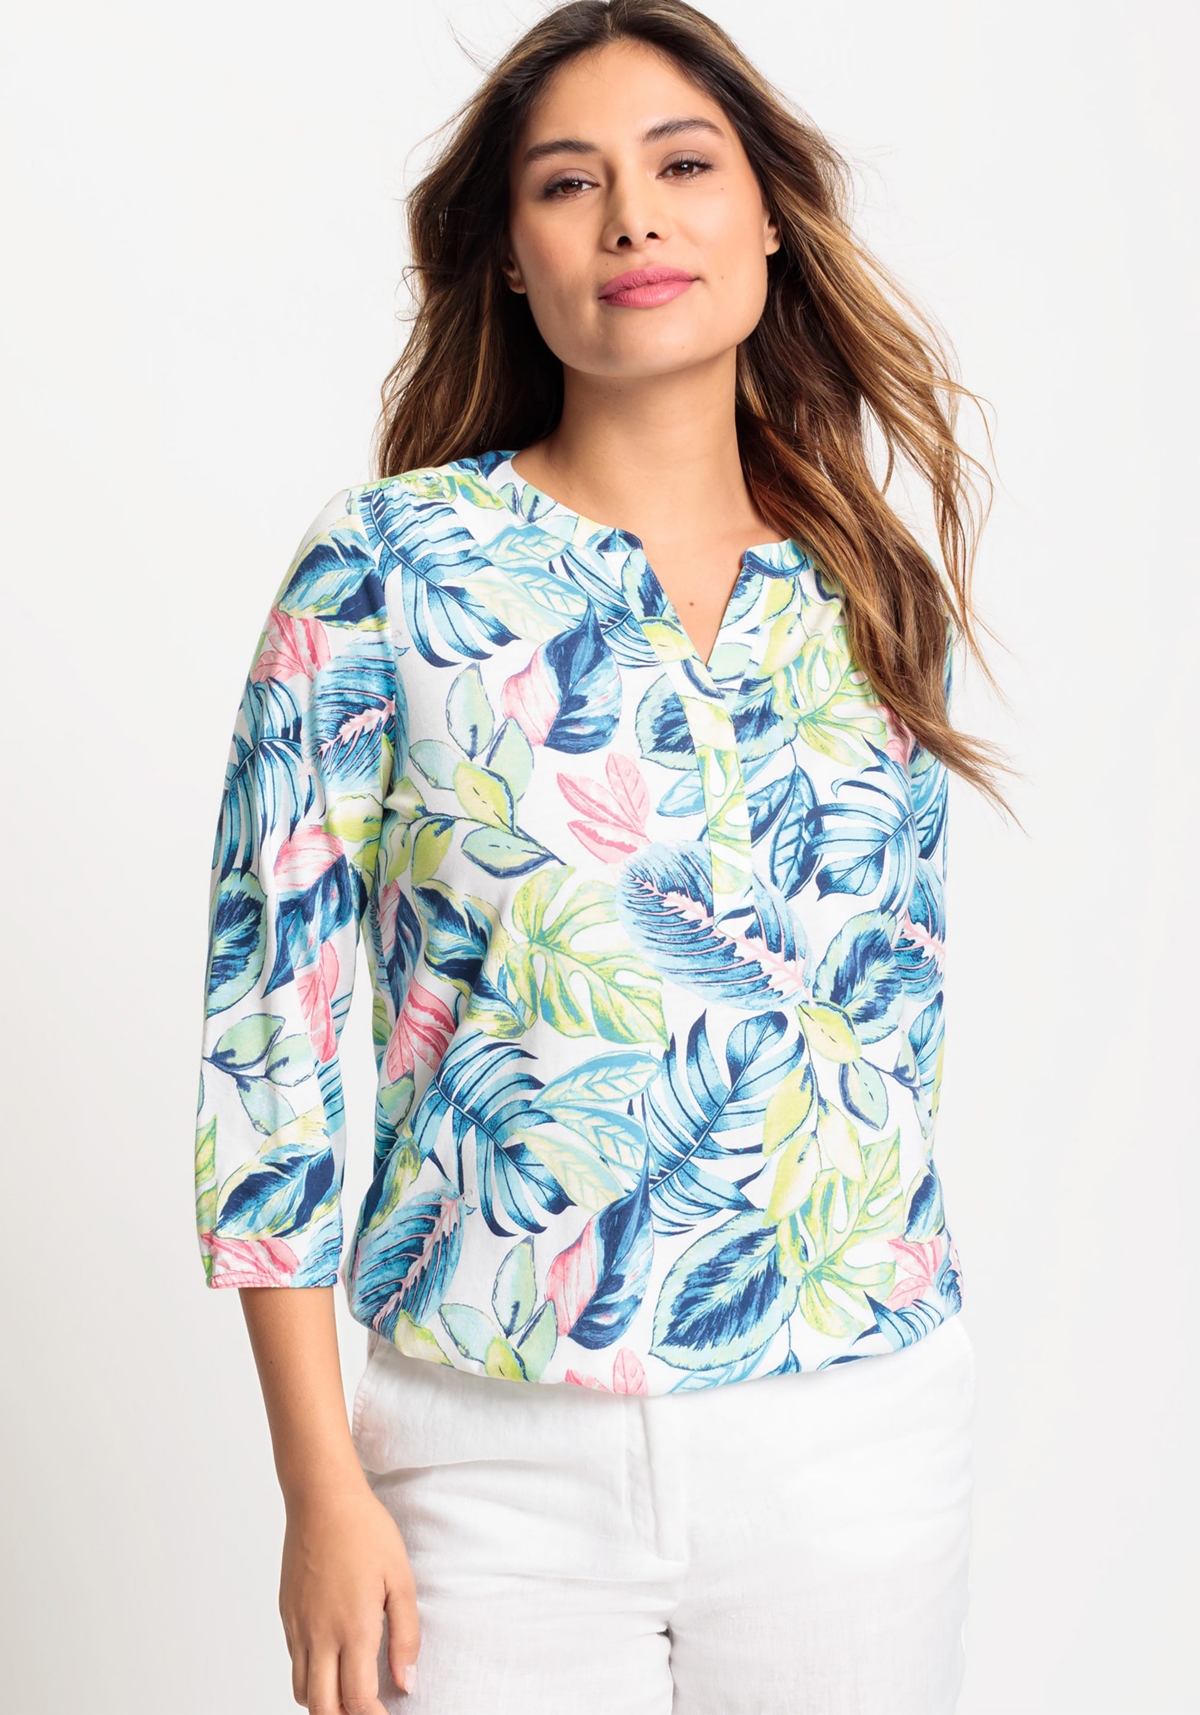 Women's 3/4 Sleeve Tropic Print Tunic Tee containing Tencel[Tm] Modal - Light turquoise